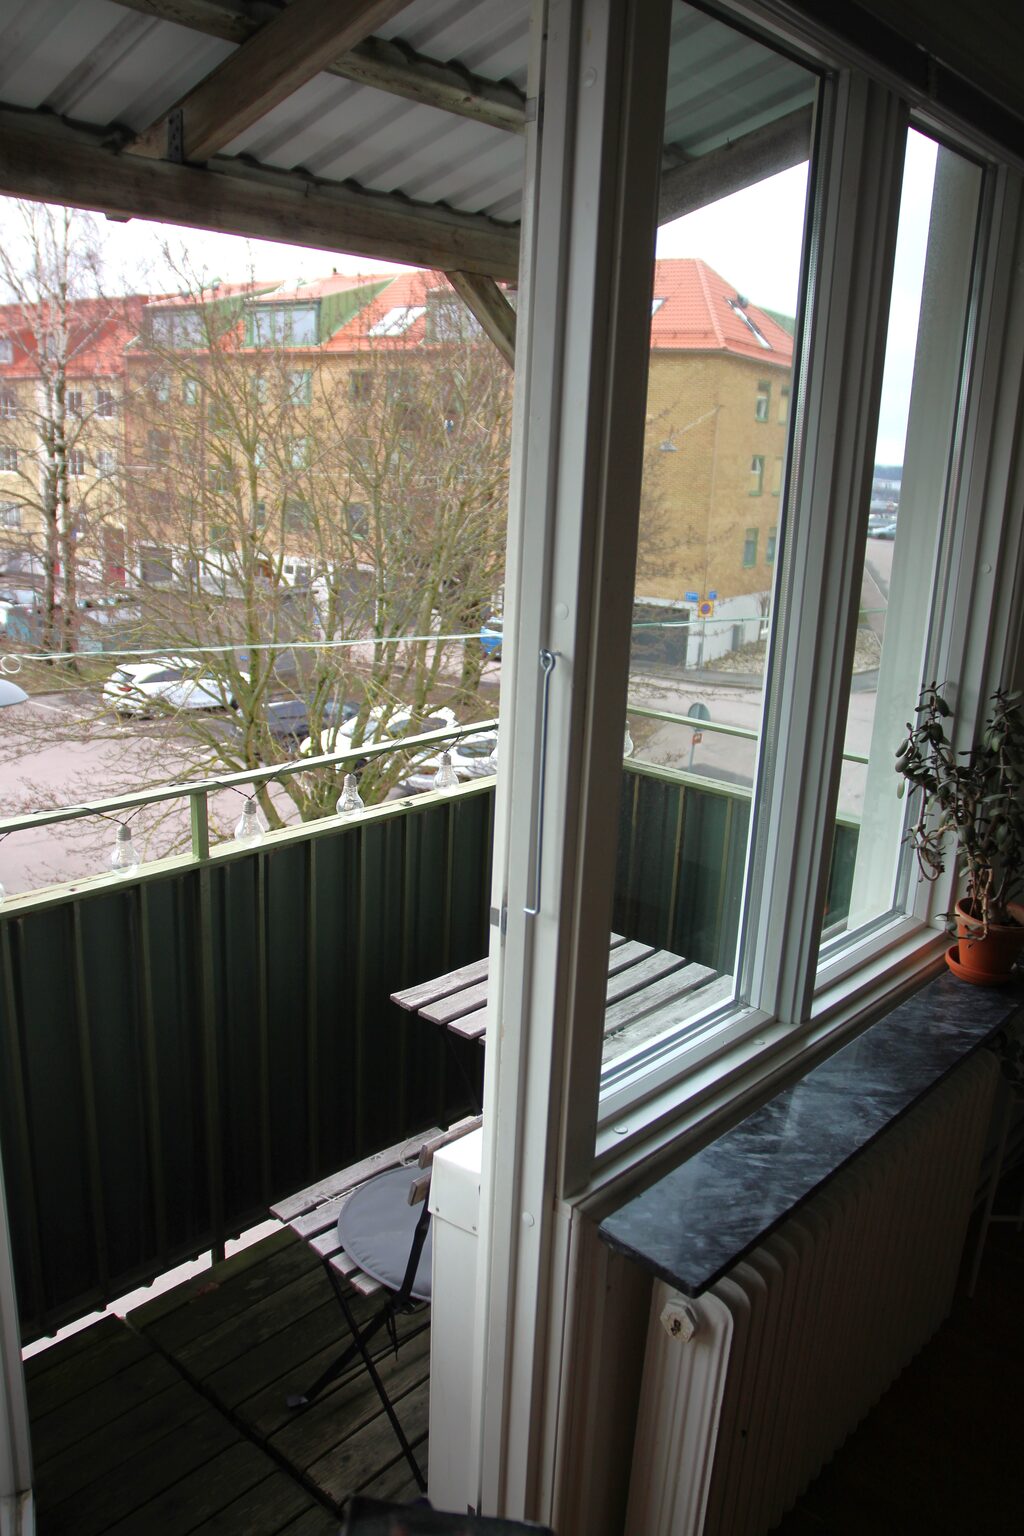 Lägenhetsbyte - Lundgatan 9B, 416 61 Göteborg